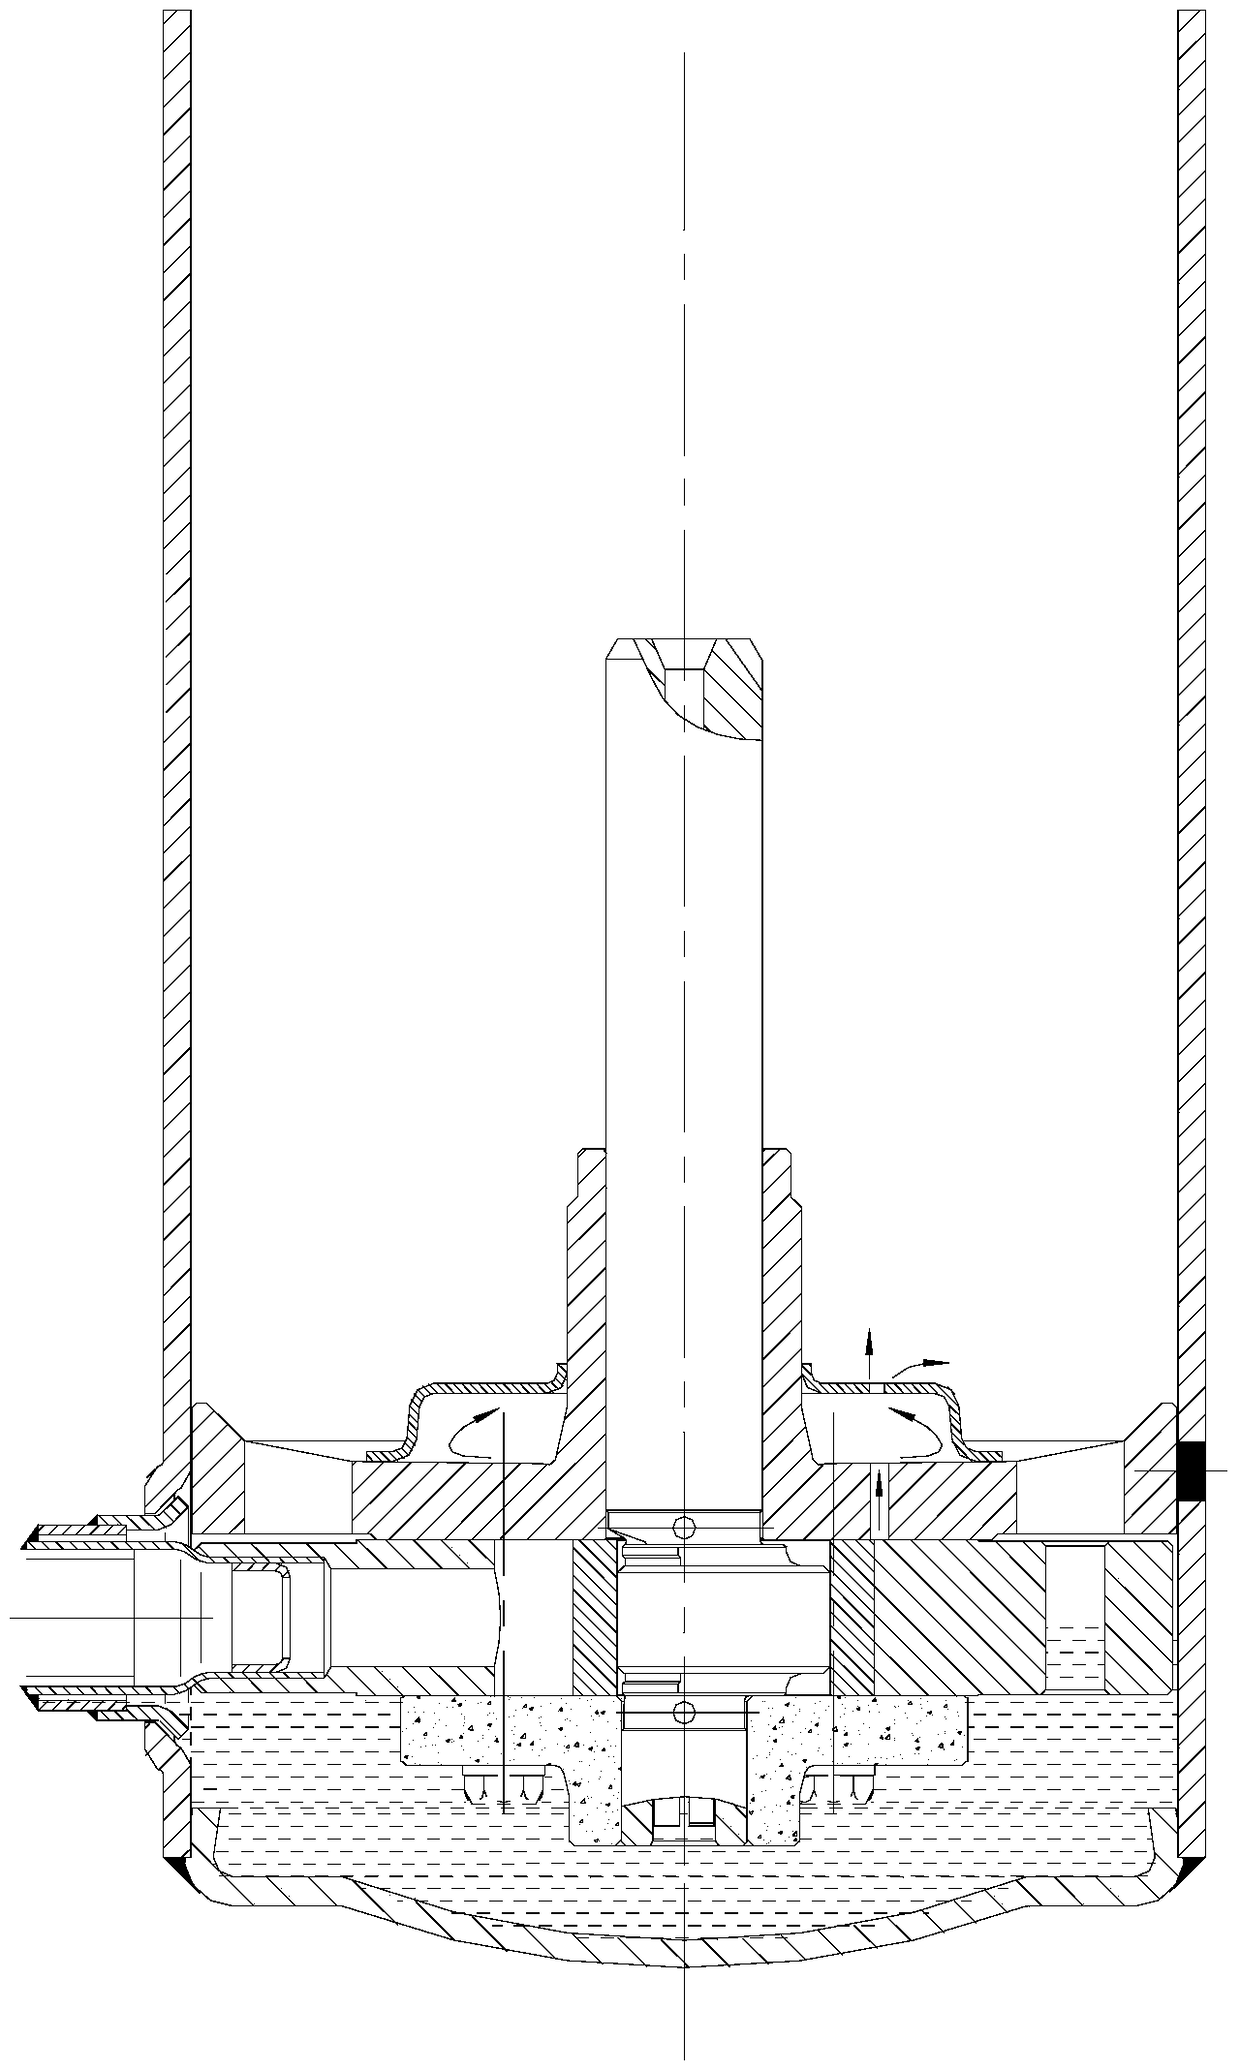 Pump structure and compressor